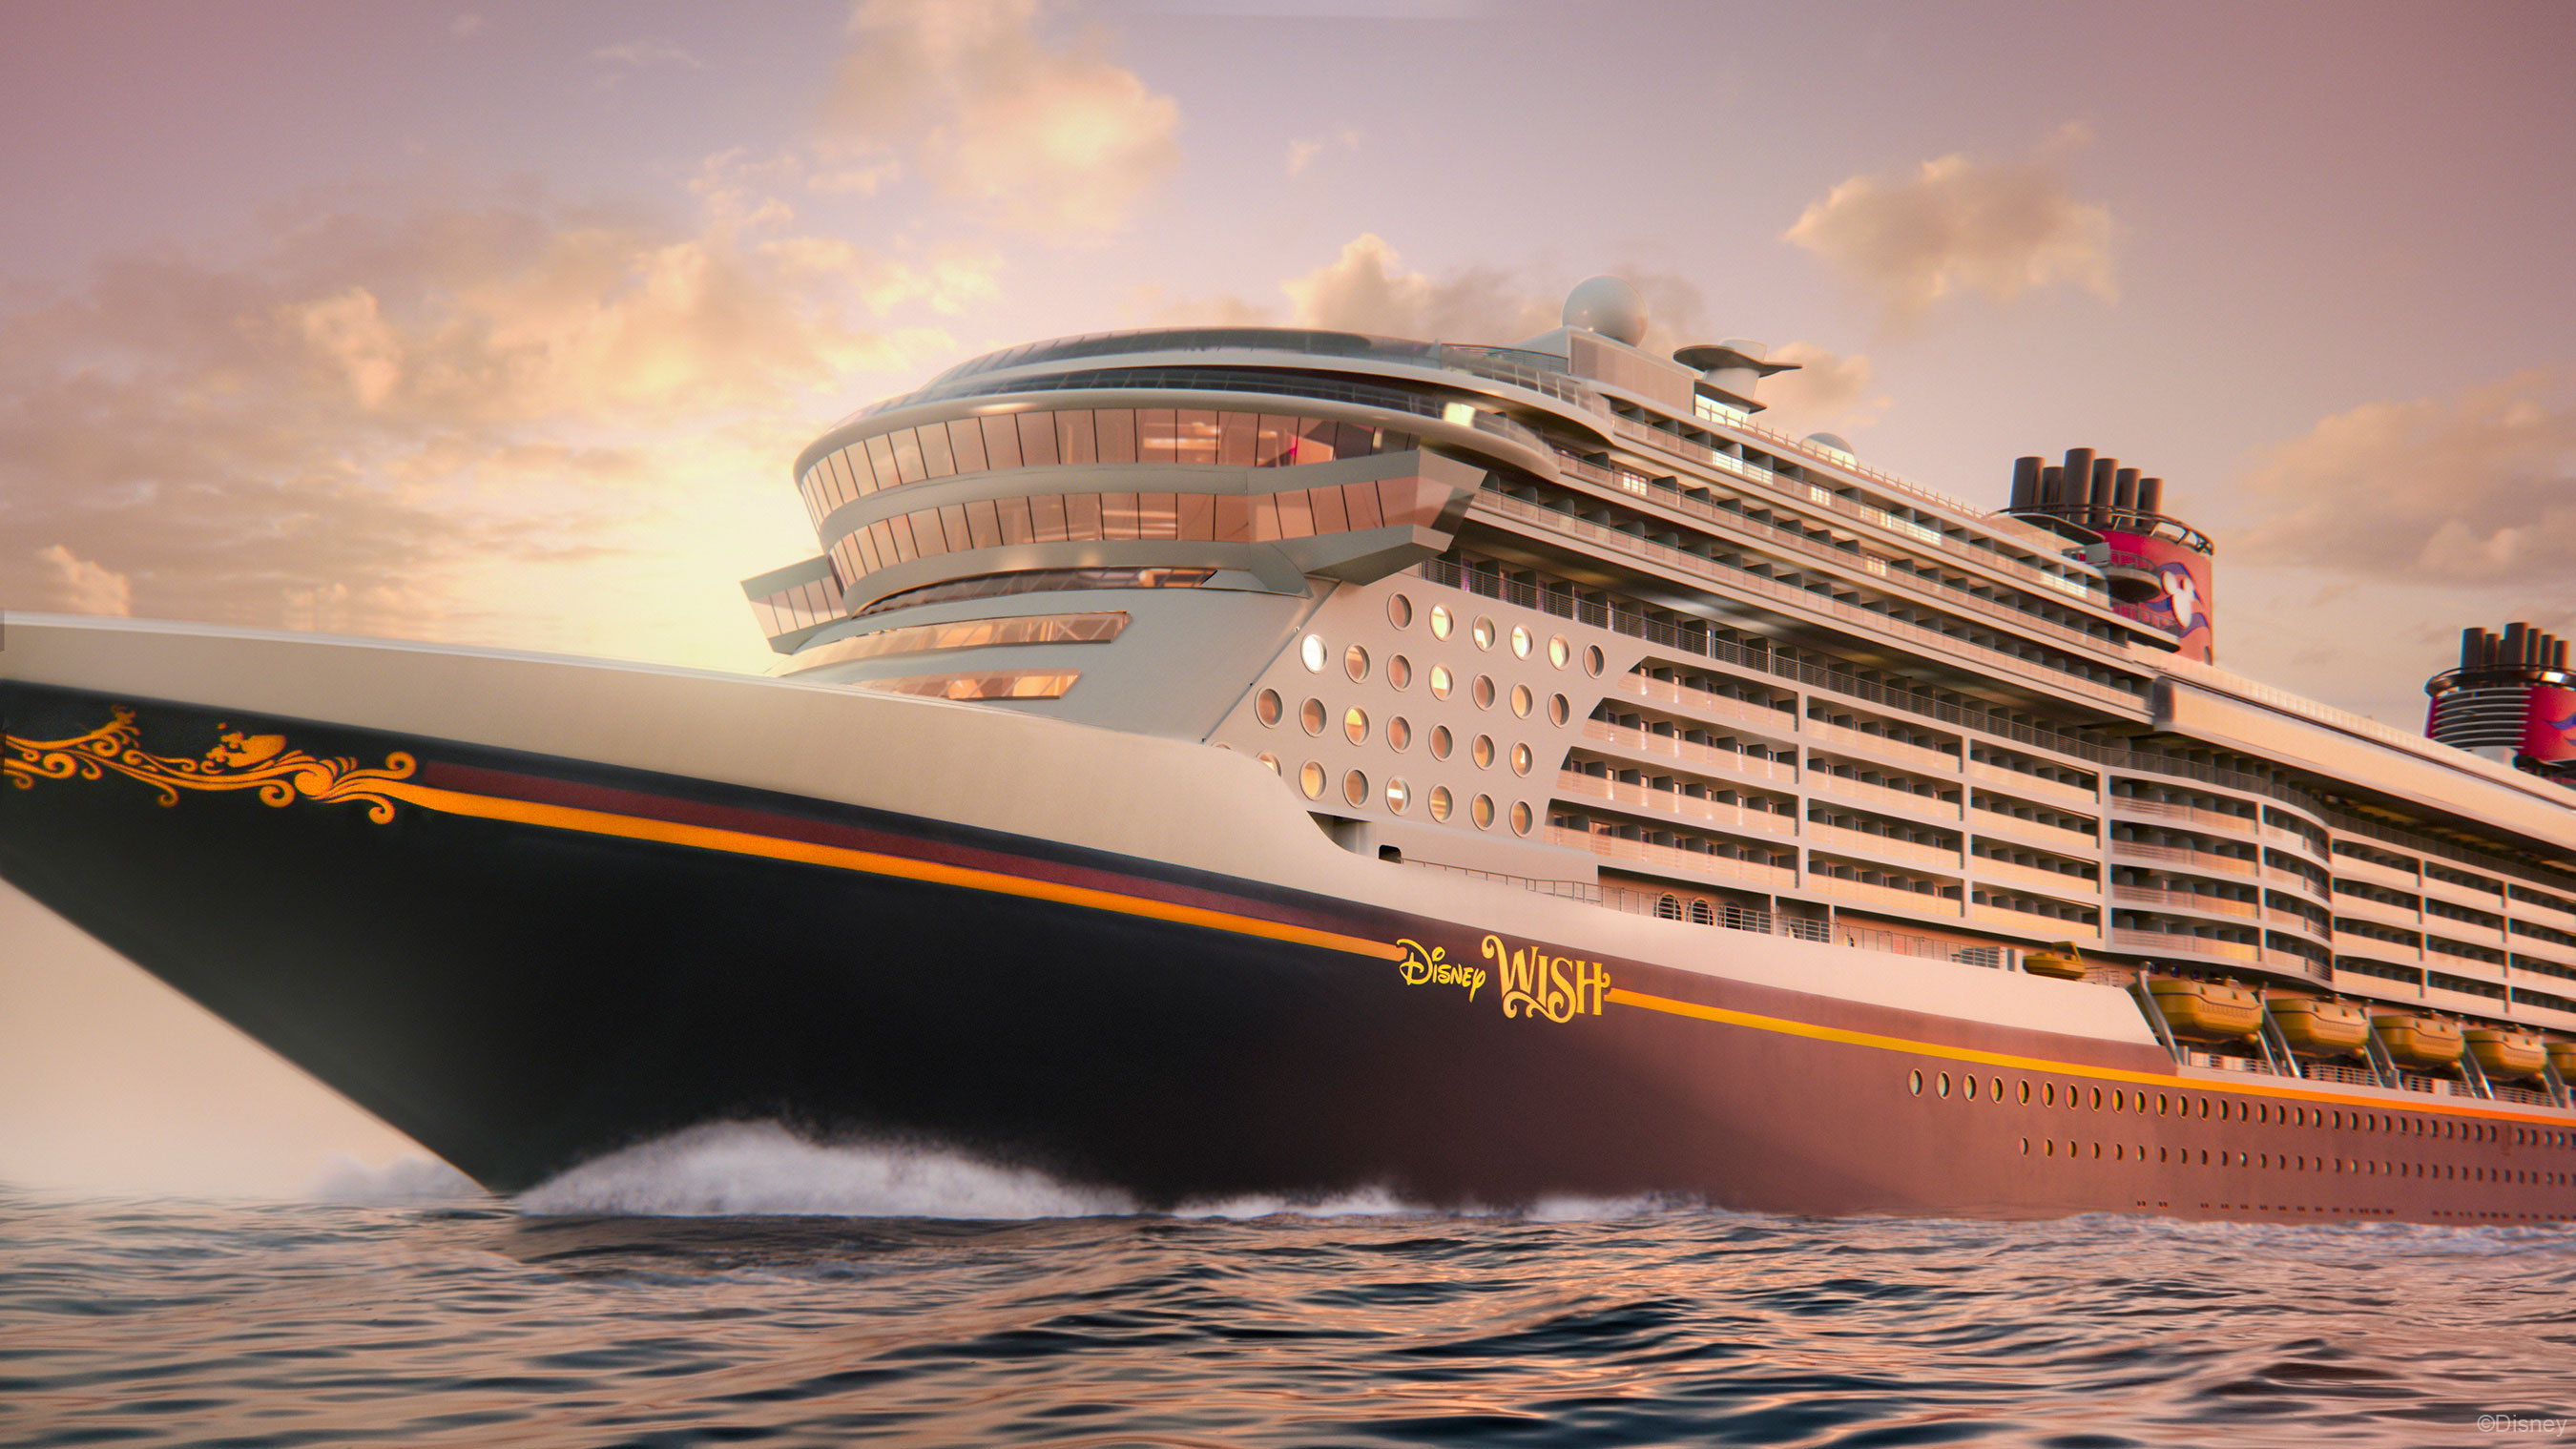 Disney Cruise Line's newest ship, Disney Wish, boasts suspended